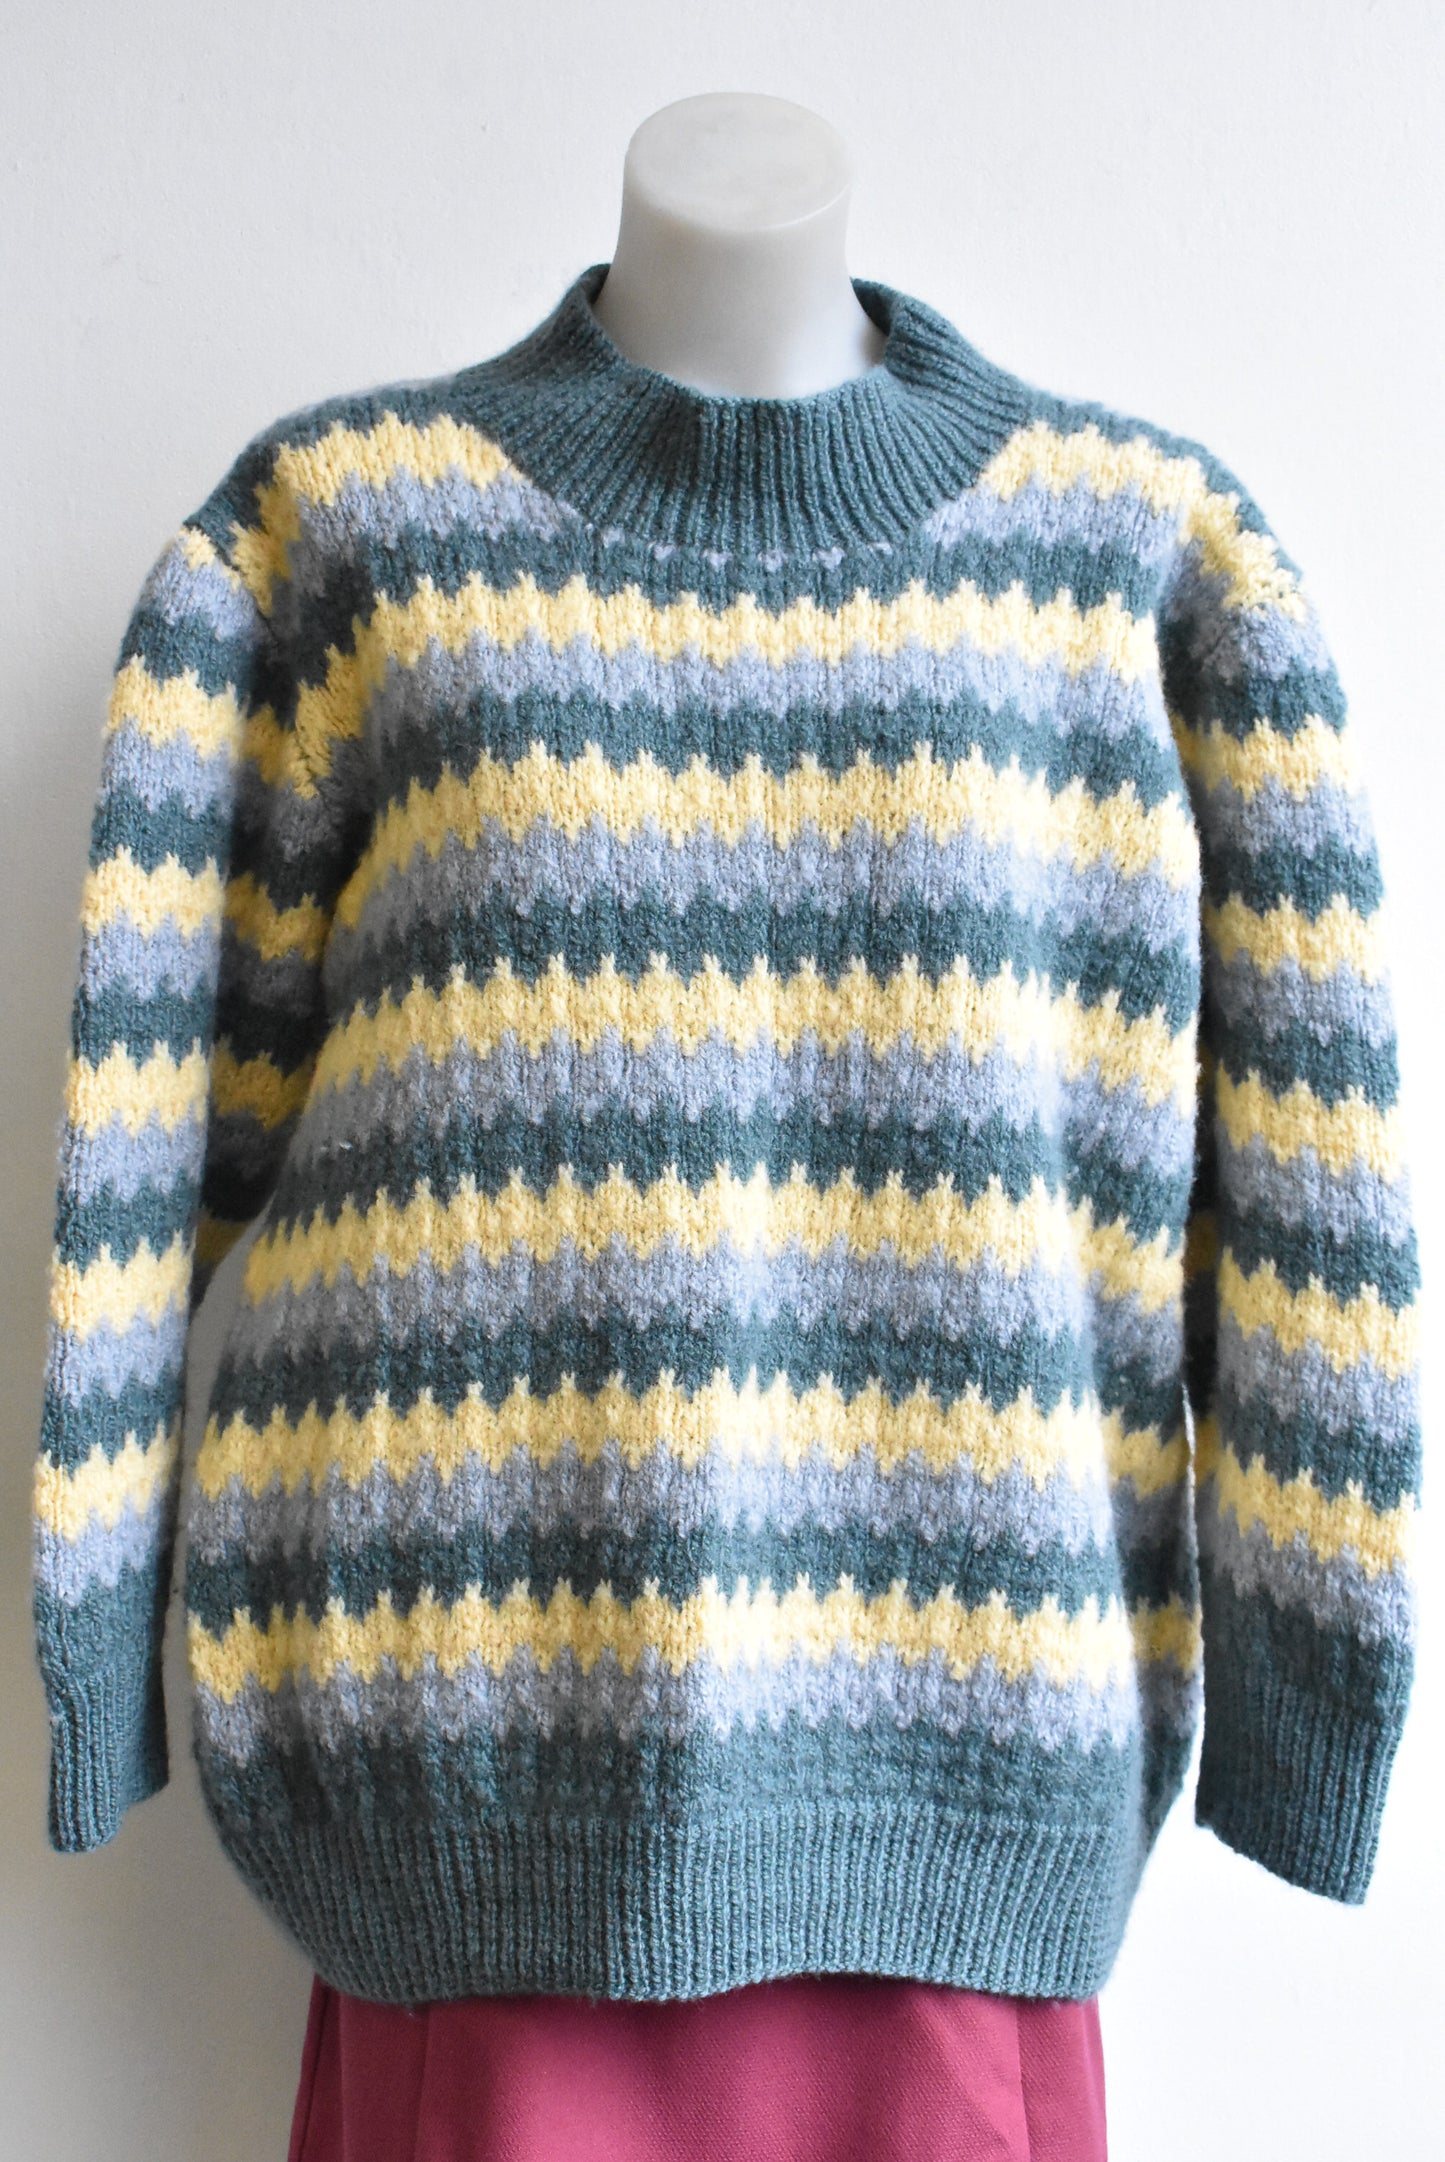 Patterned wool jumper, size M/L